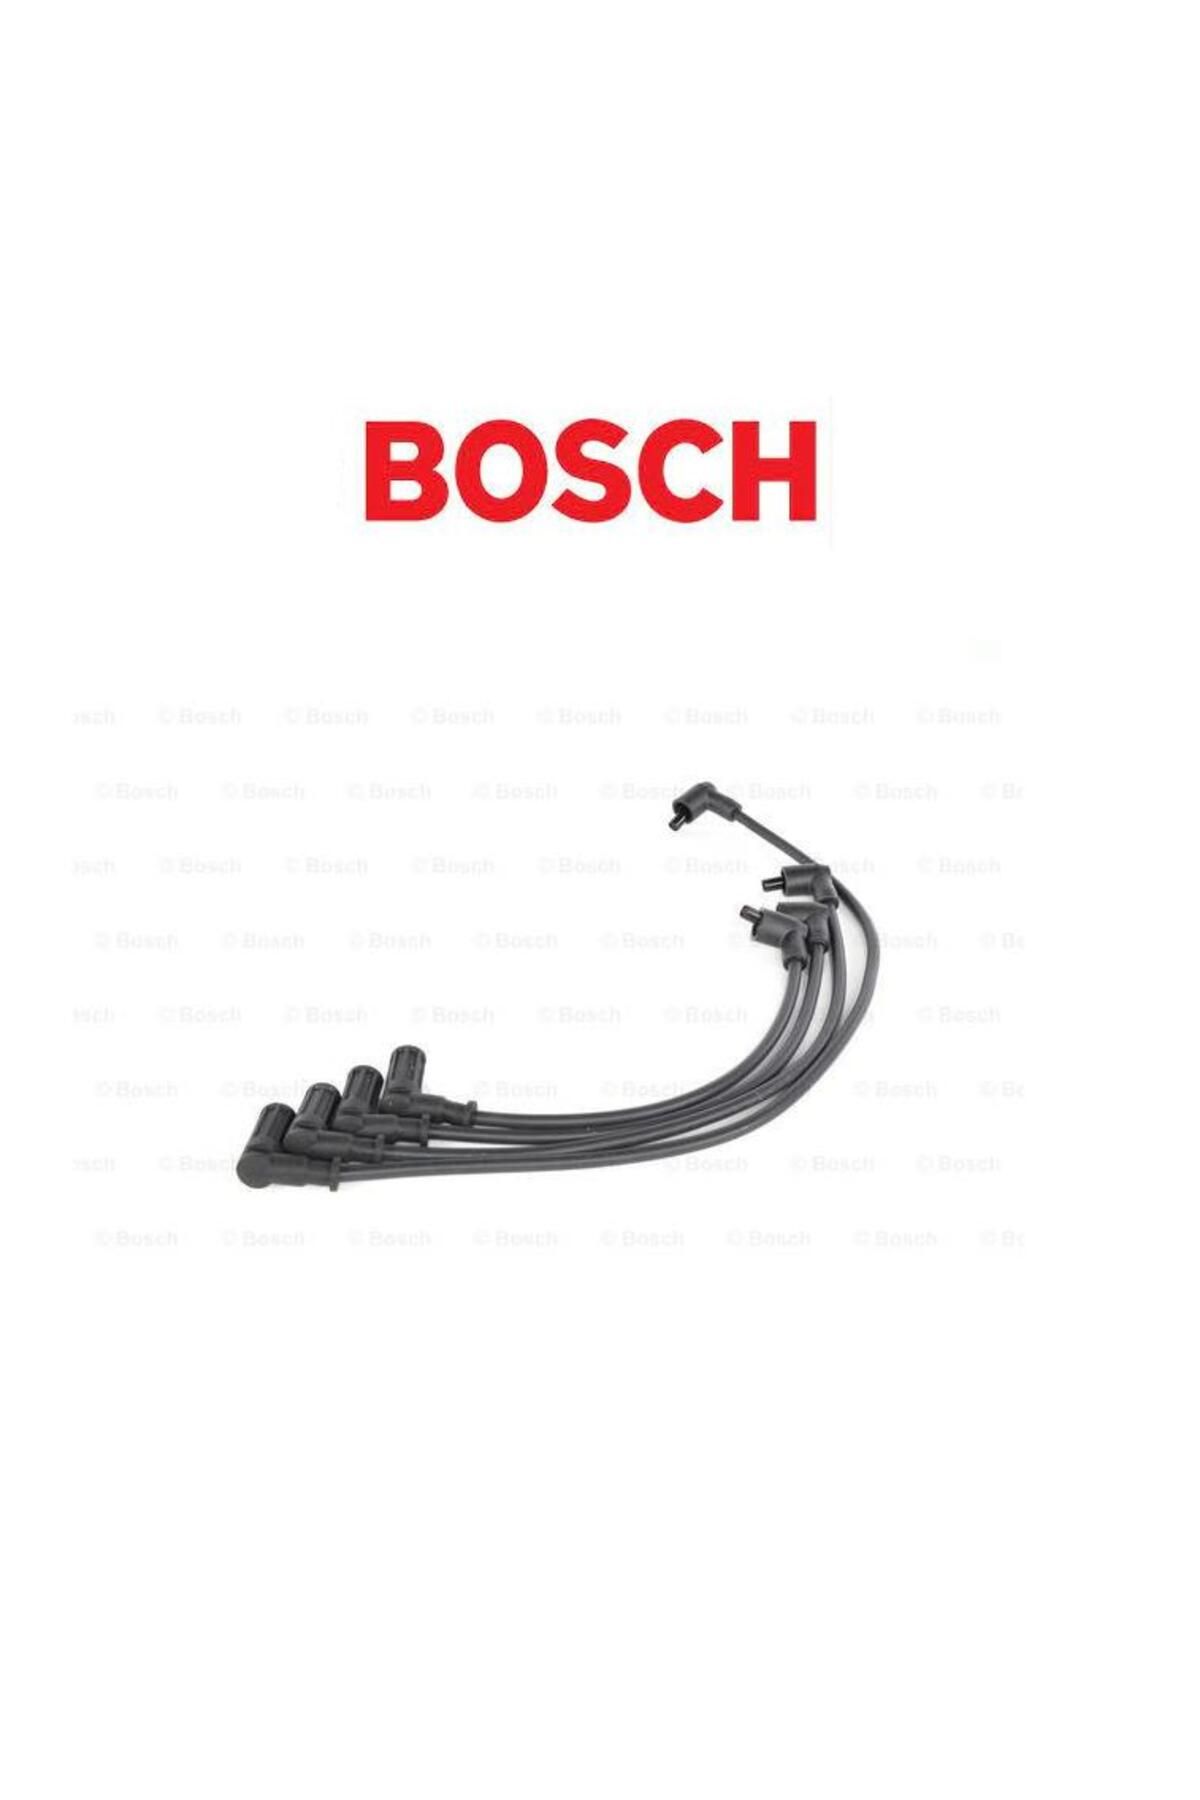 Bosch BUJİ KABLOSU SET PUNTO 1 176 94/97 TEMPRA 159 94+ 1,6/1,6İ B738 0986356738  BOSCH